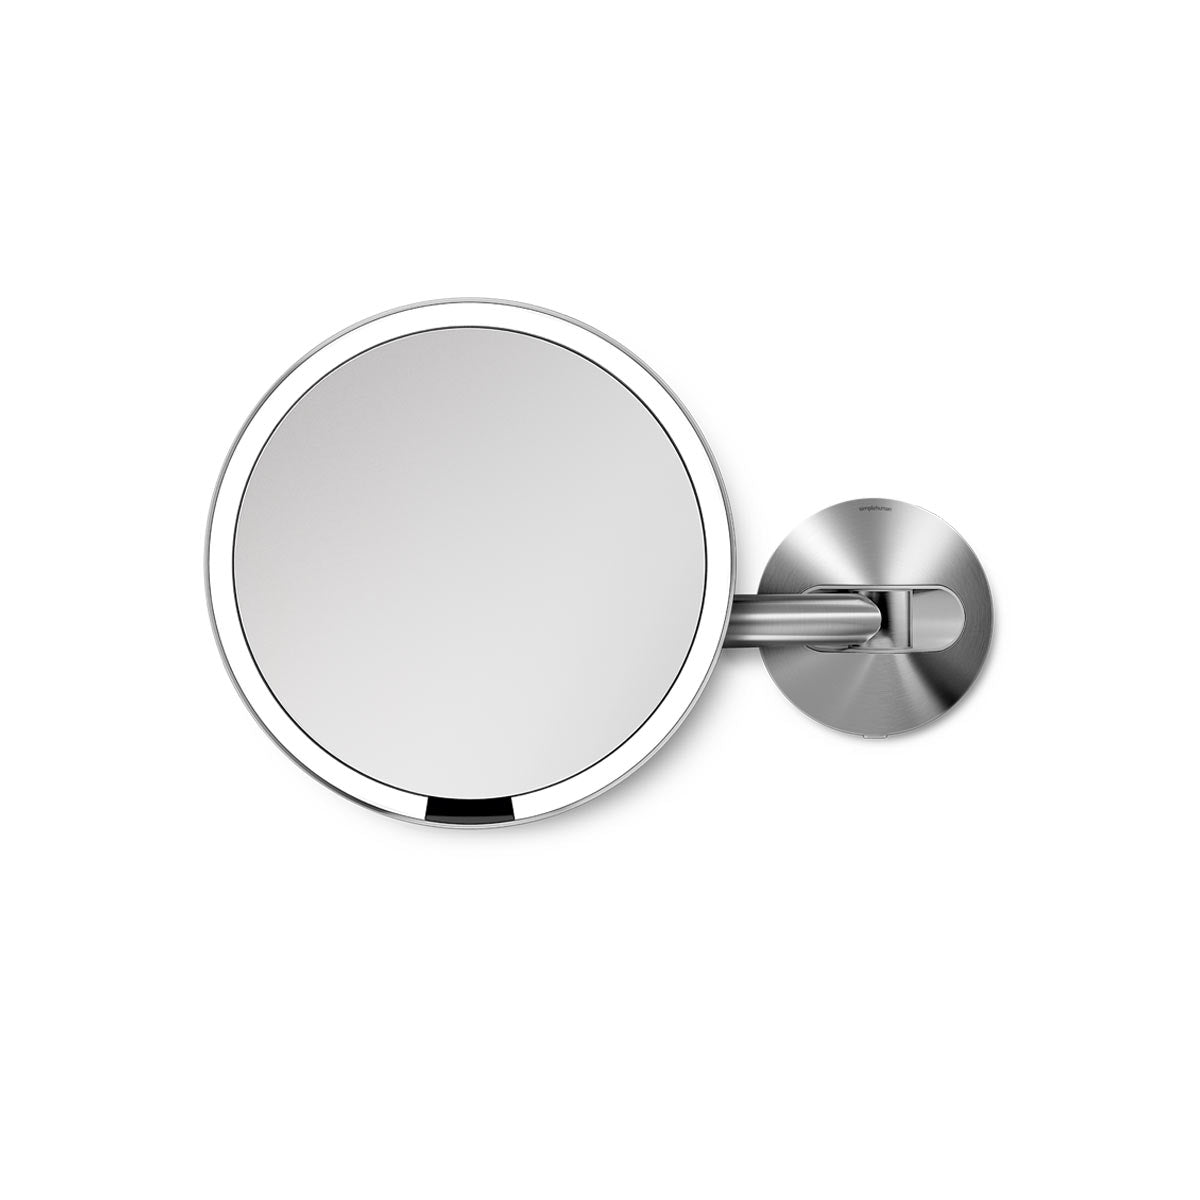 registration: sensor mirrors - hard-wired wall mount sensor mirror